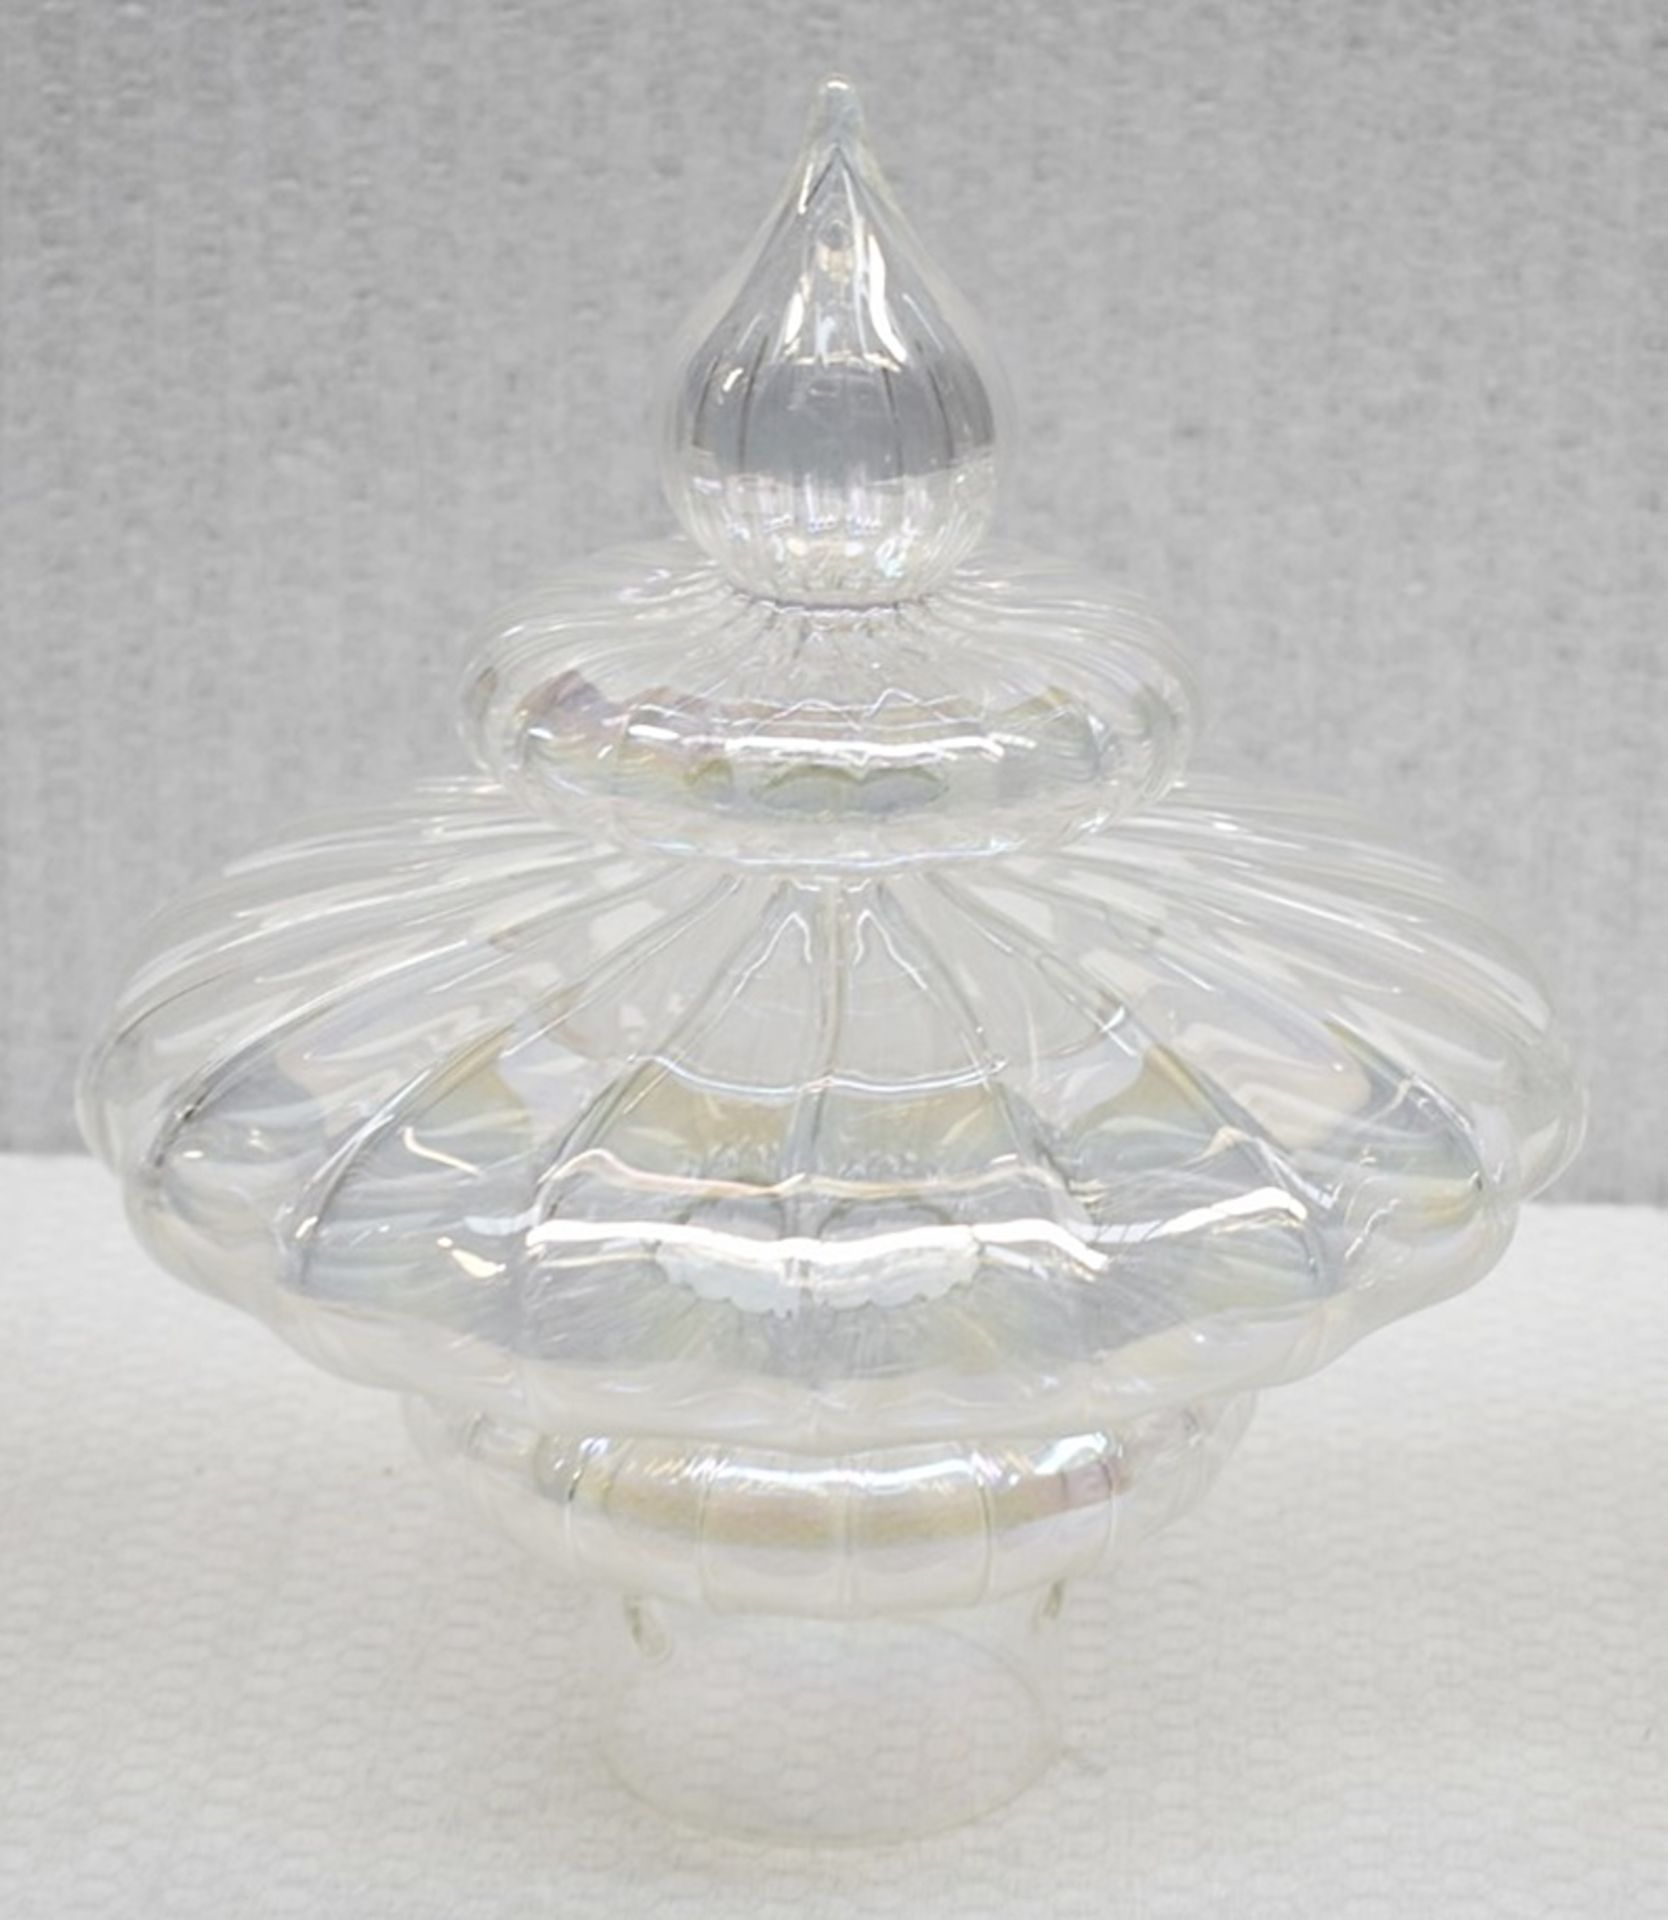 1 x HEATHFIELD & CO Luxury 'Basilca' Triple Pendant Light In Polished Nickel, With Fluted Artisan - Image 14 of 17